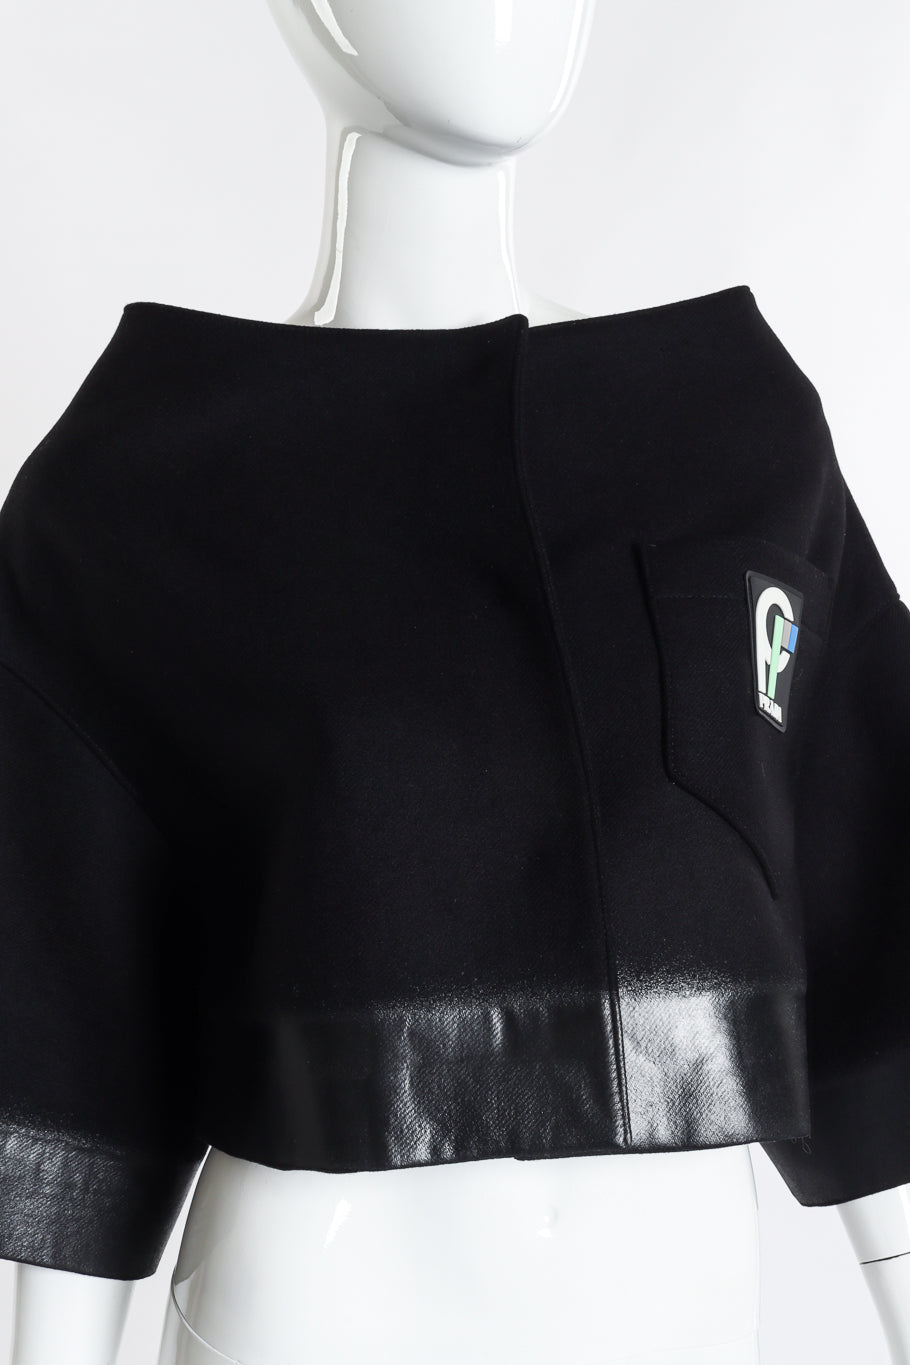 Prada 2018 F/W Cropped Wool Jacket front on mannequin closeup @recess la